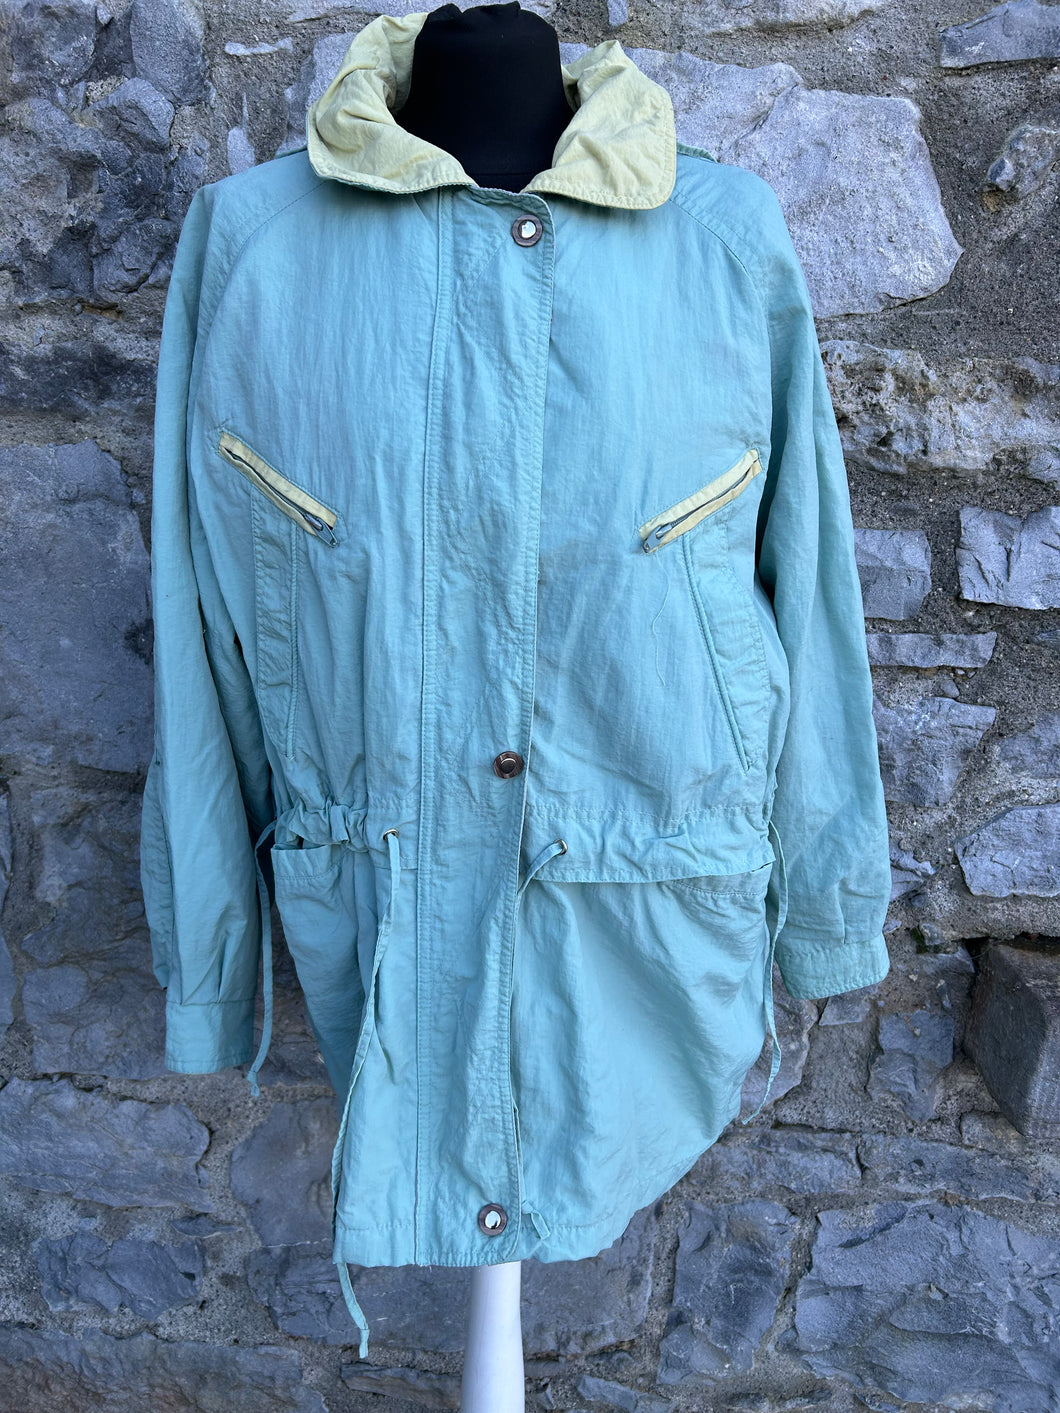 80s light blue jacket uk 10-12